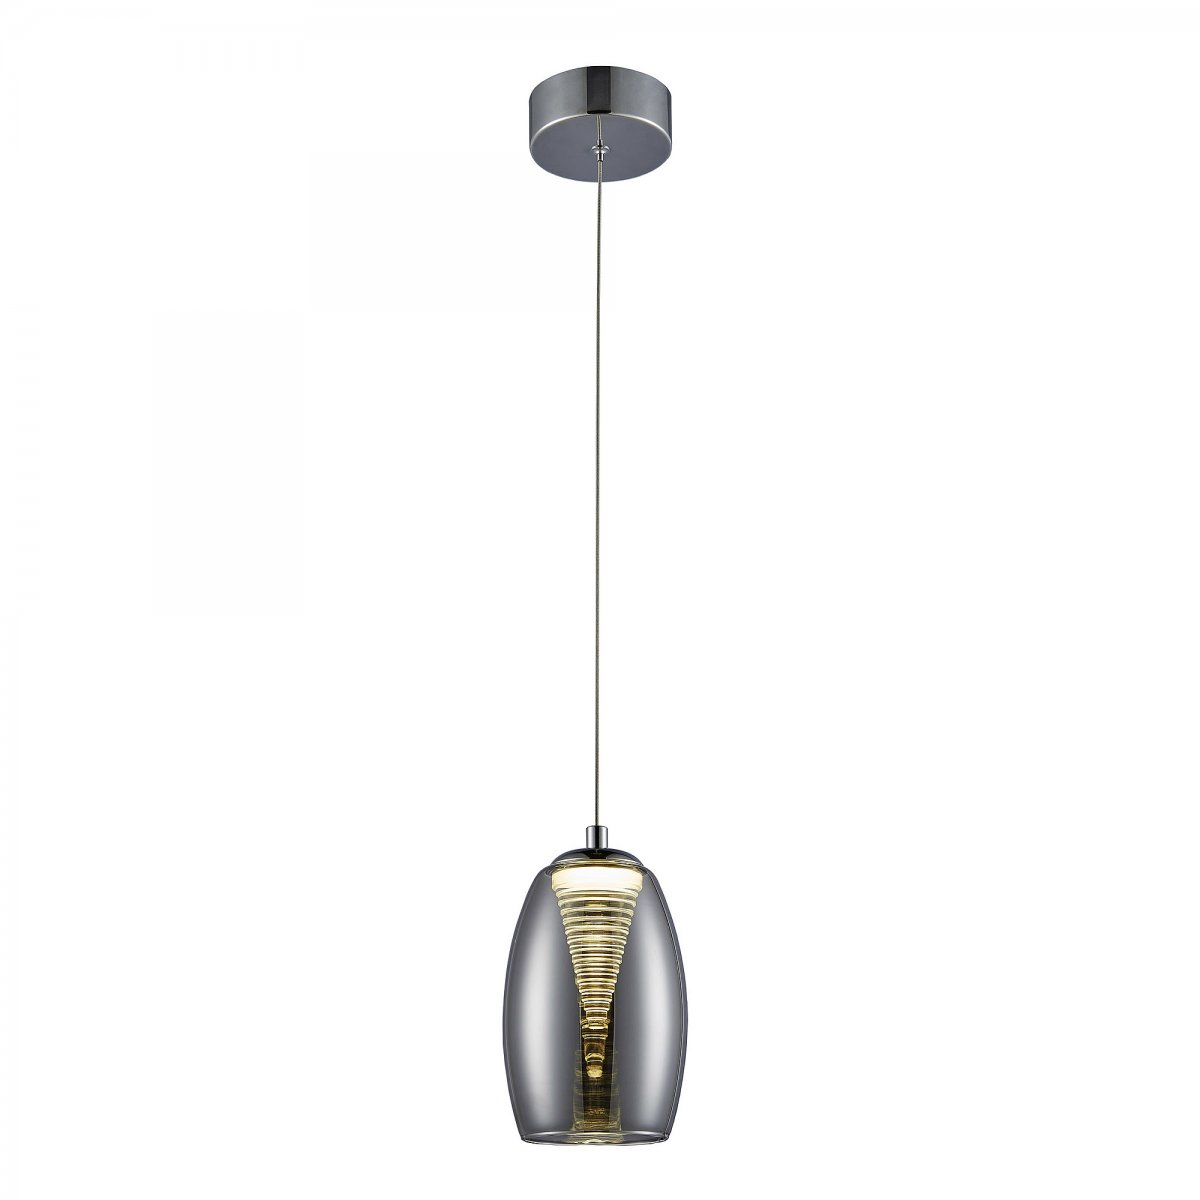 G60770-93 LED --> Metropolis Brilliant & Pendelleuchte No. online Leuchten rauchglas Lampen Living Leuchten chrom,